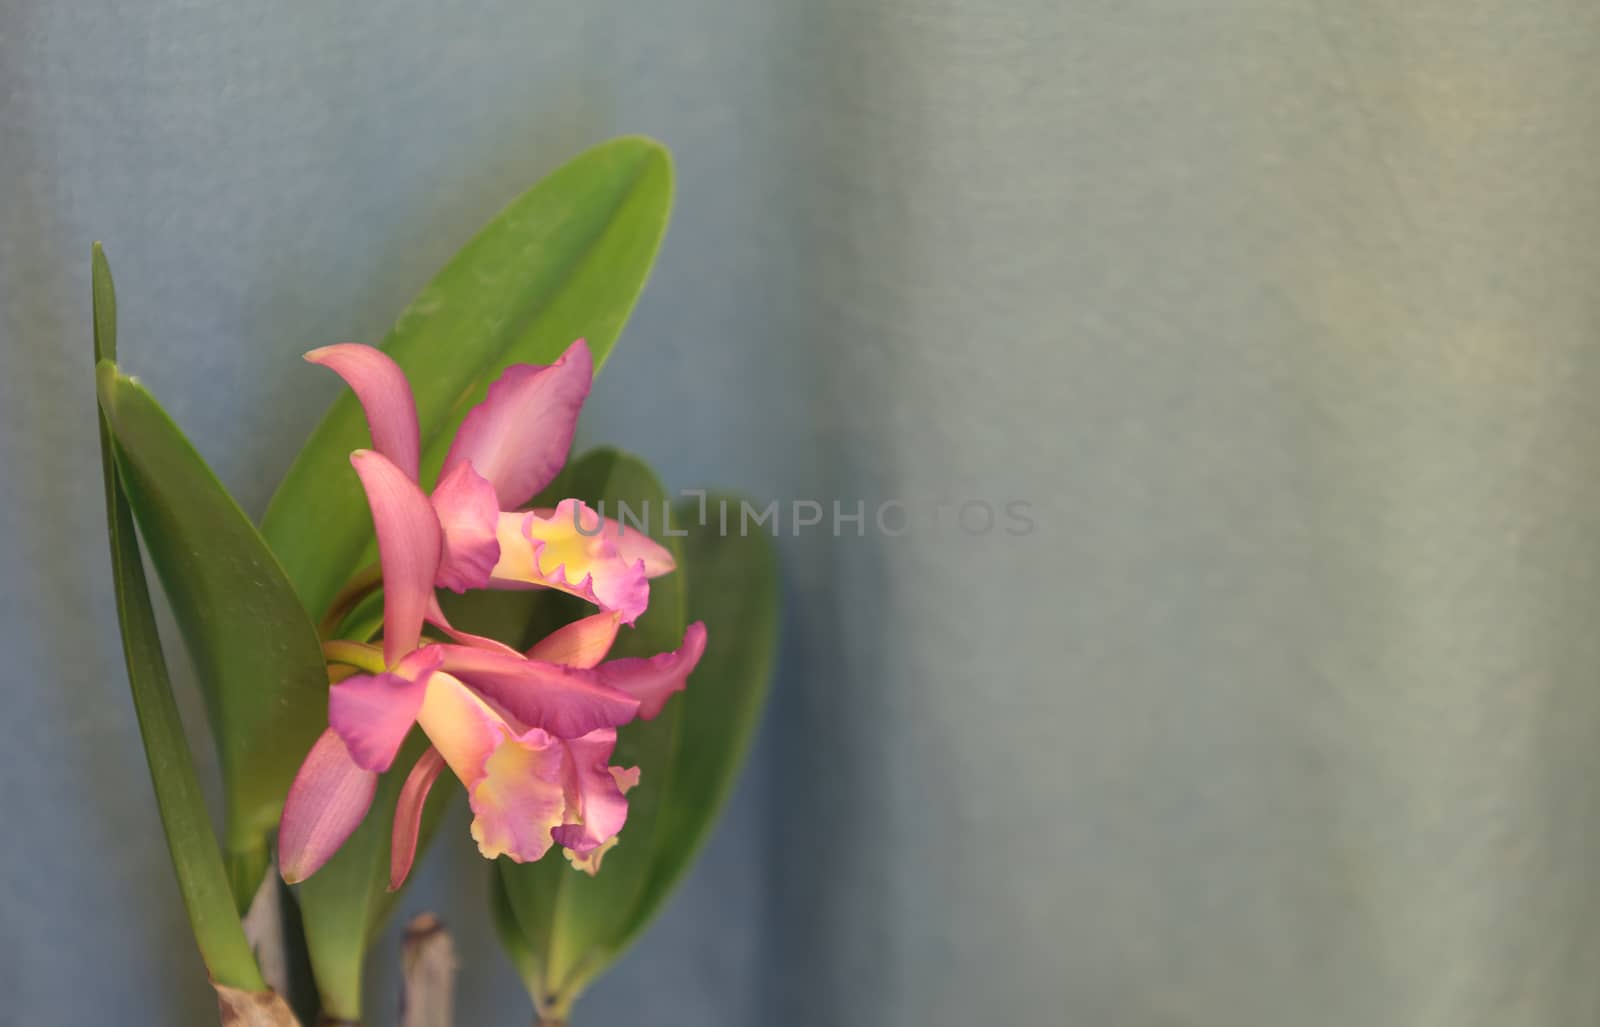 Cattleya orchid flower by steffstarr